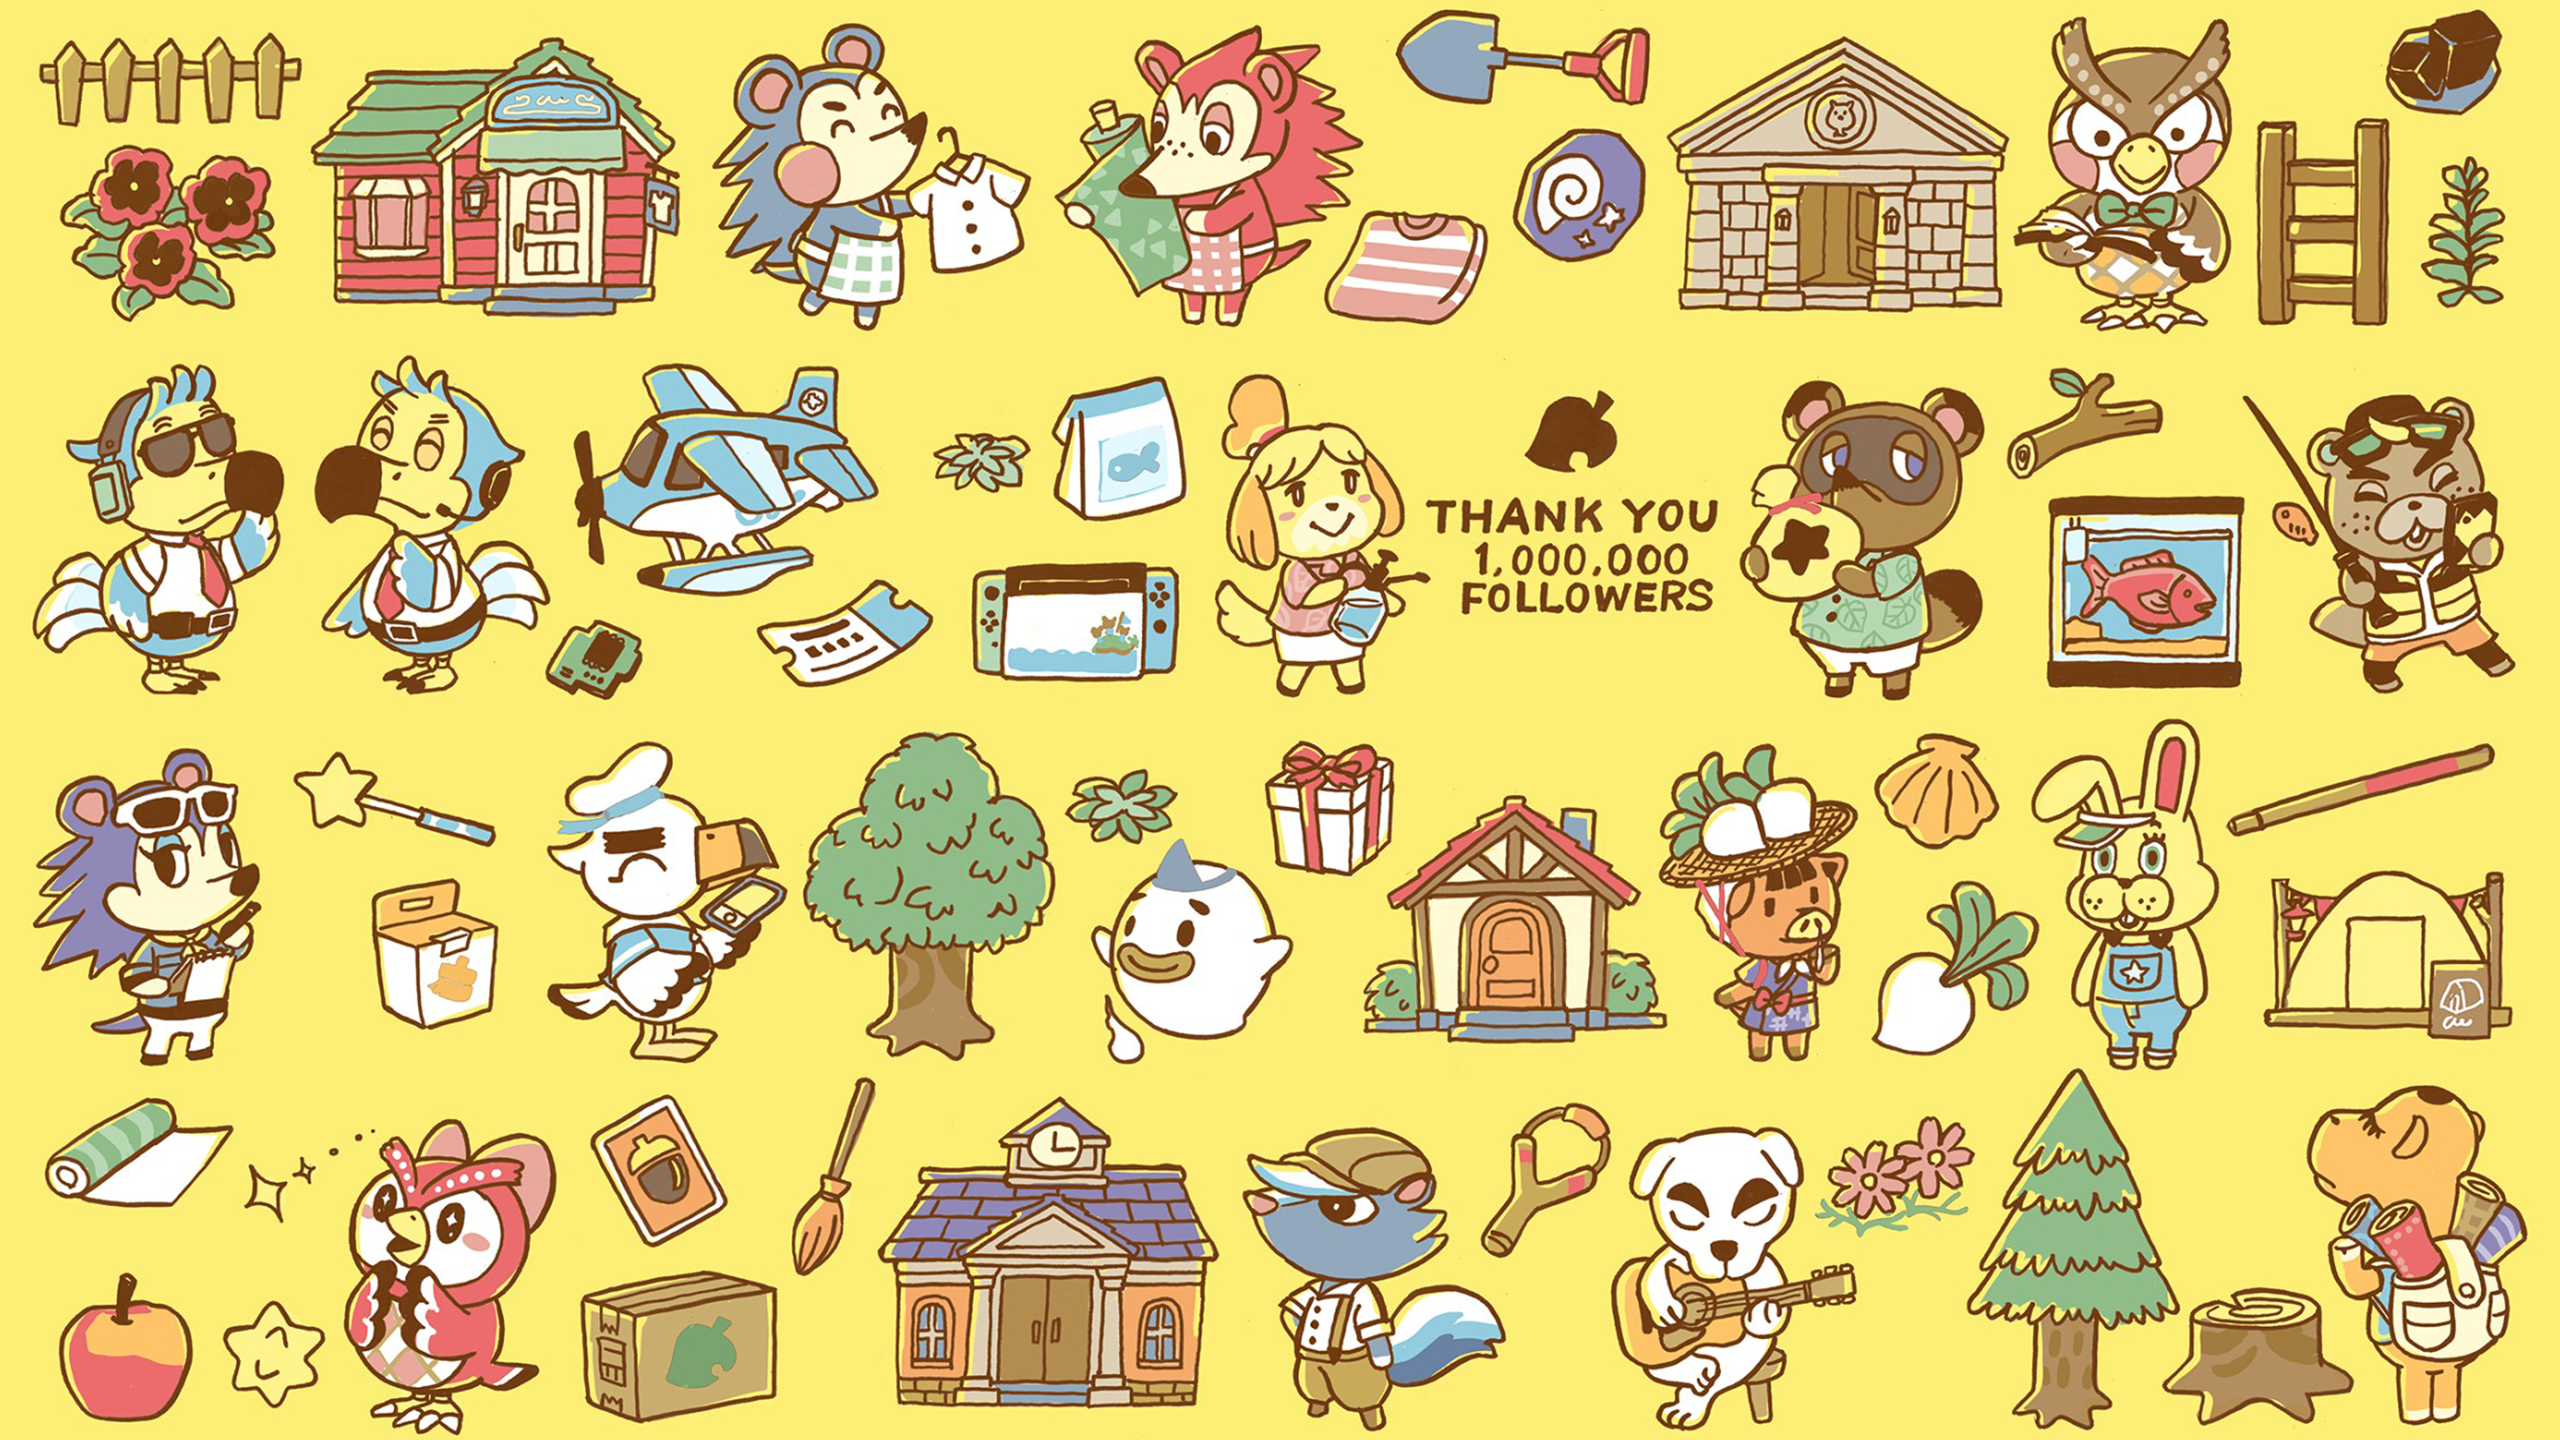 Animal Crossing Wallpaper